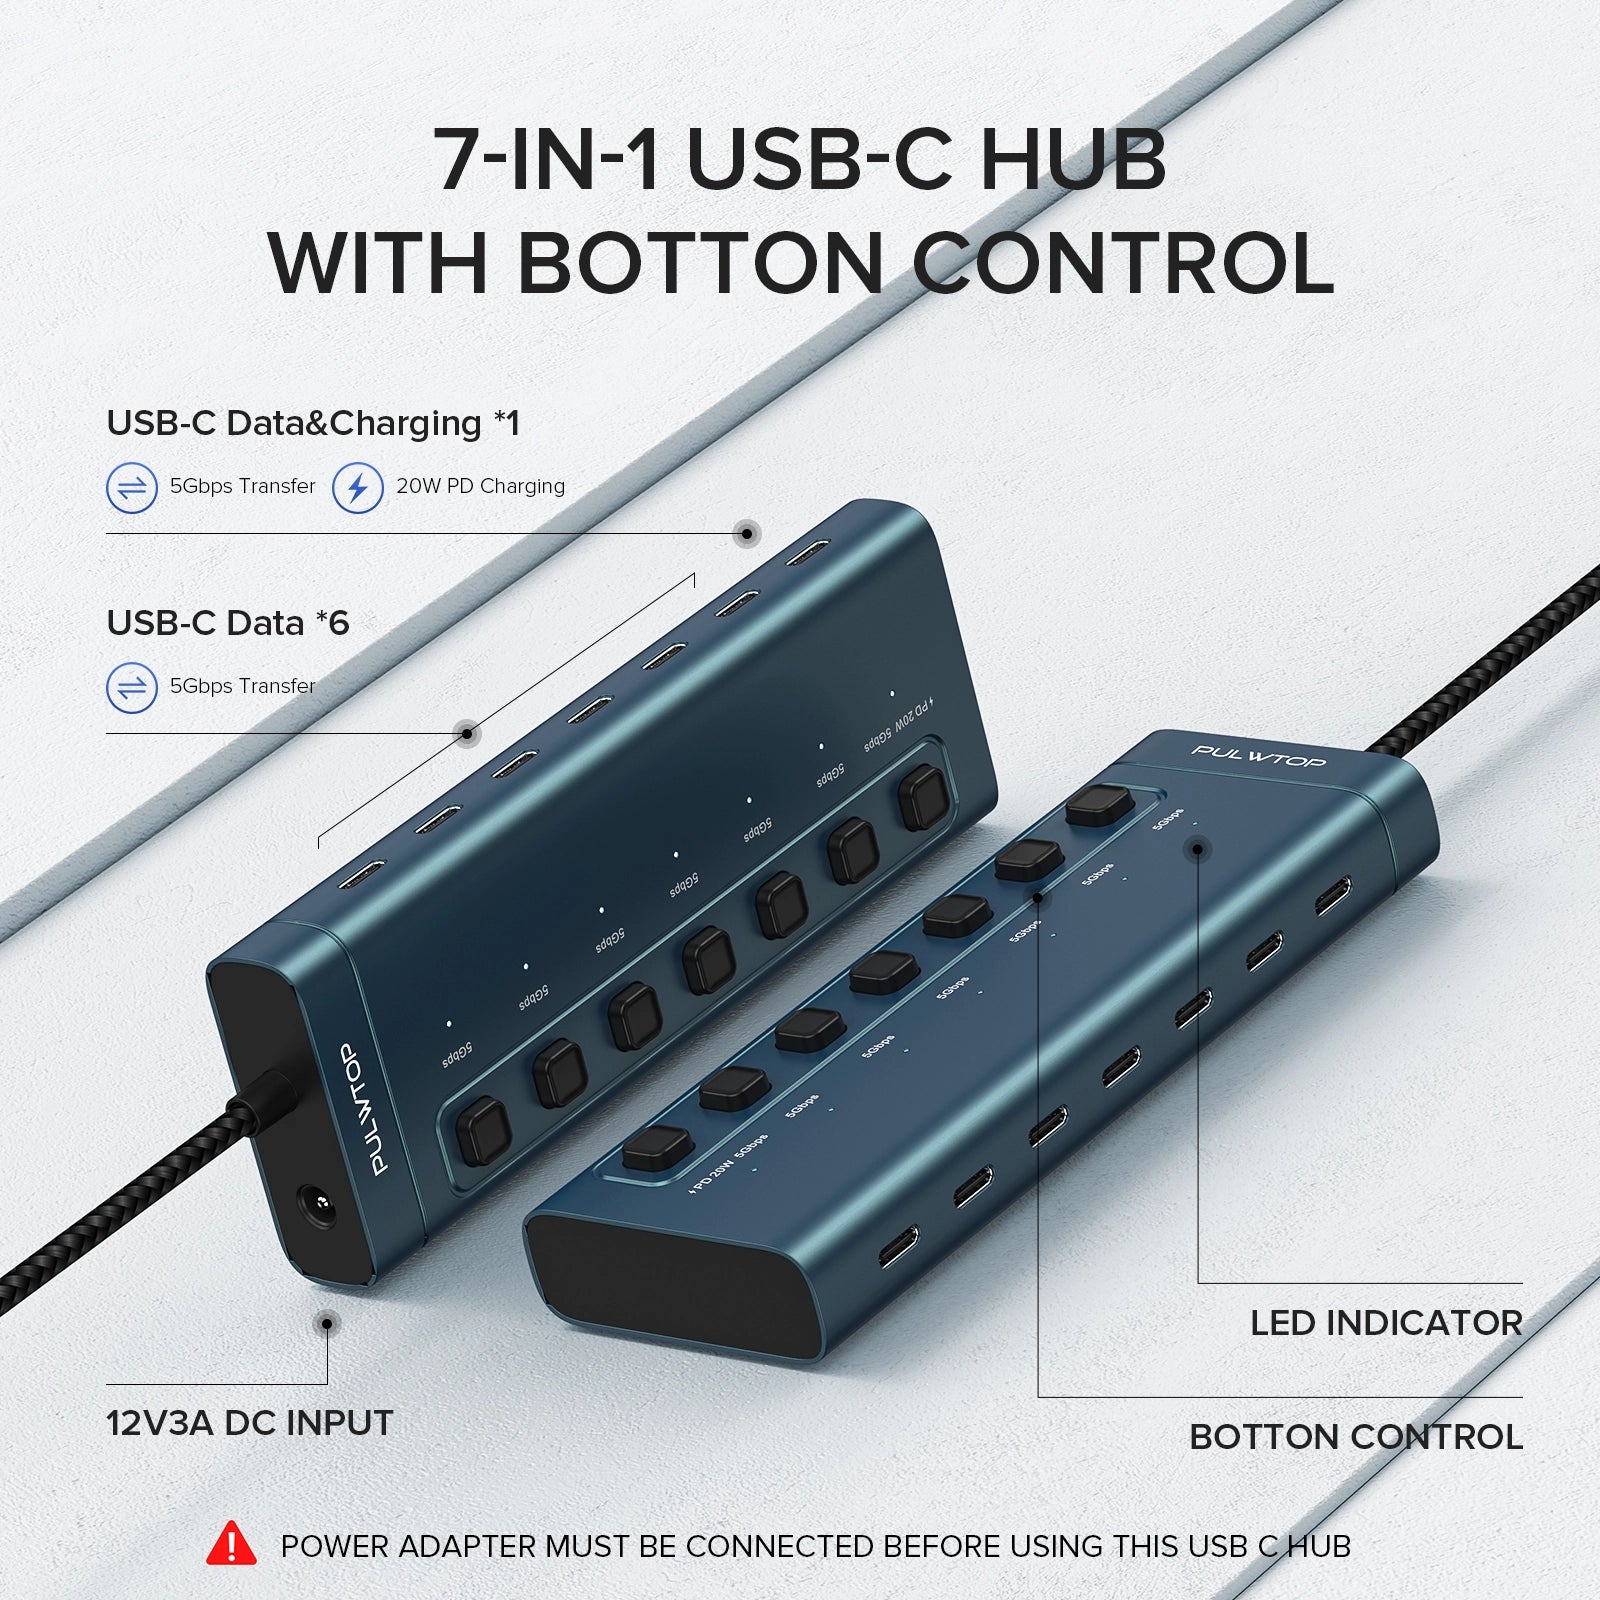 PULWTOP Powered USB Hub - USB C Hub Multiport Adapter 7 USB C Data 5Gbps ,Smart charging for iPad ,iPhone ect.